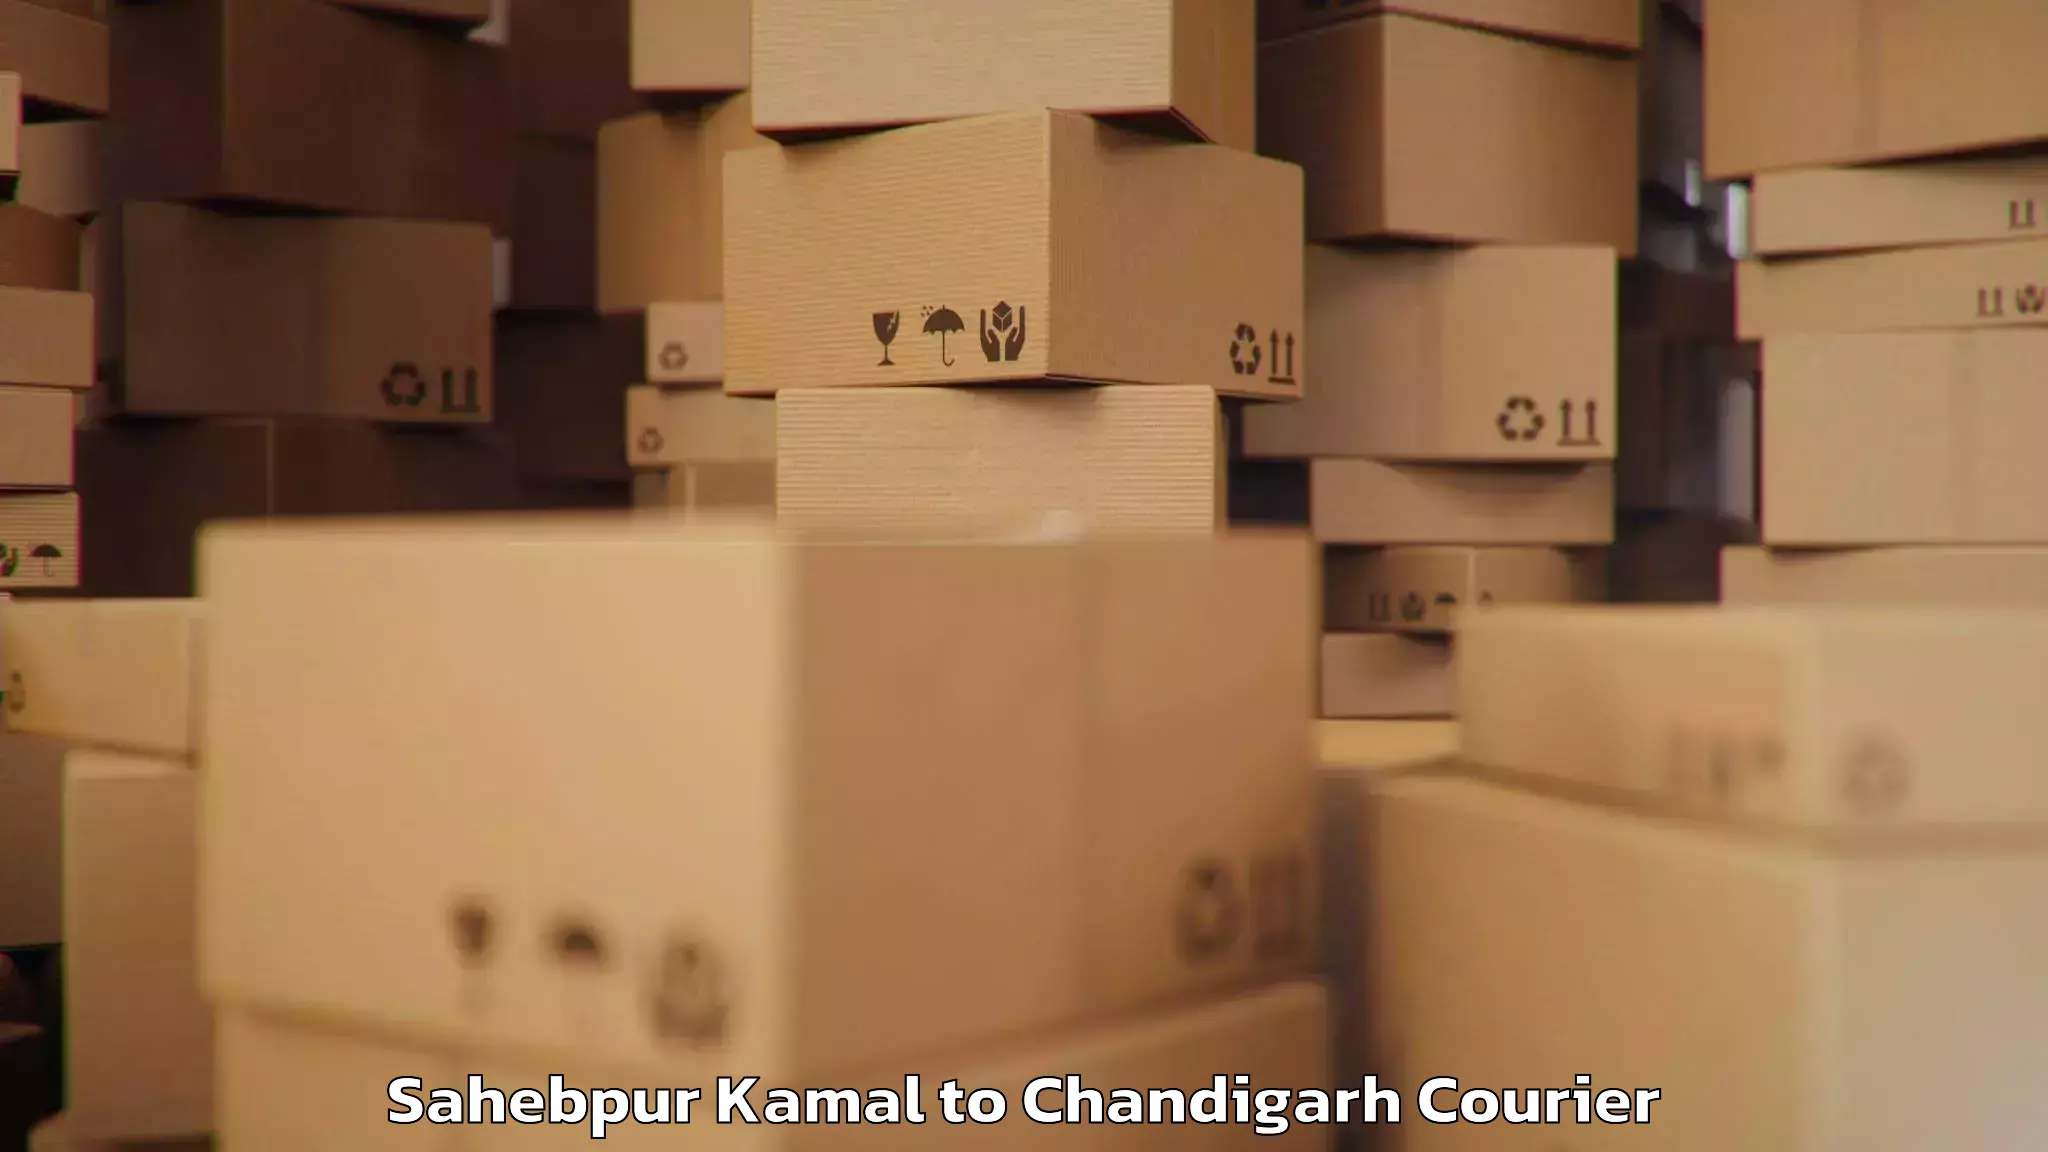 Luggage transport service Sahebpur Kamal to Chandigarh